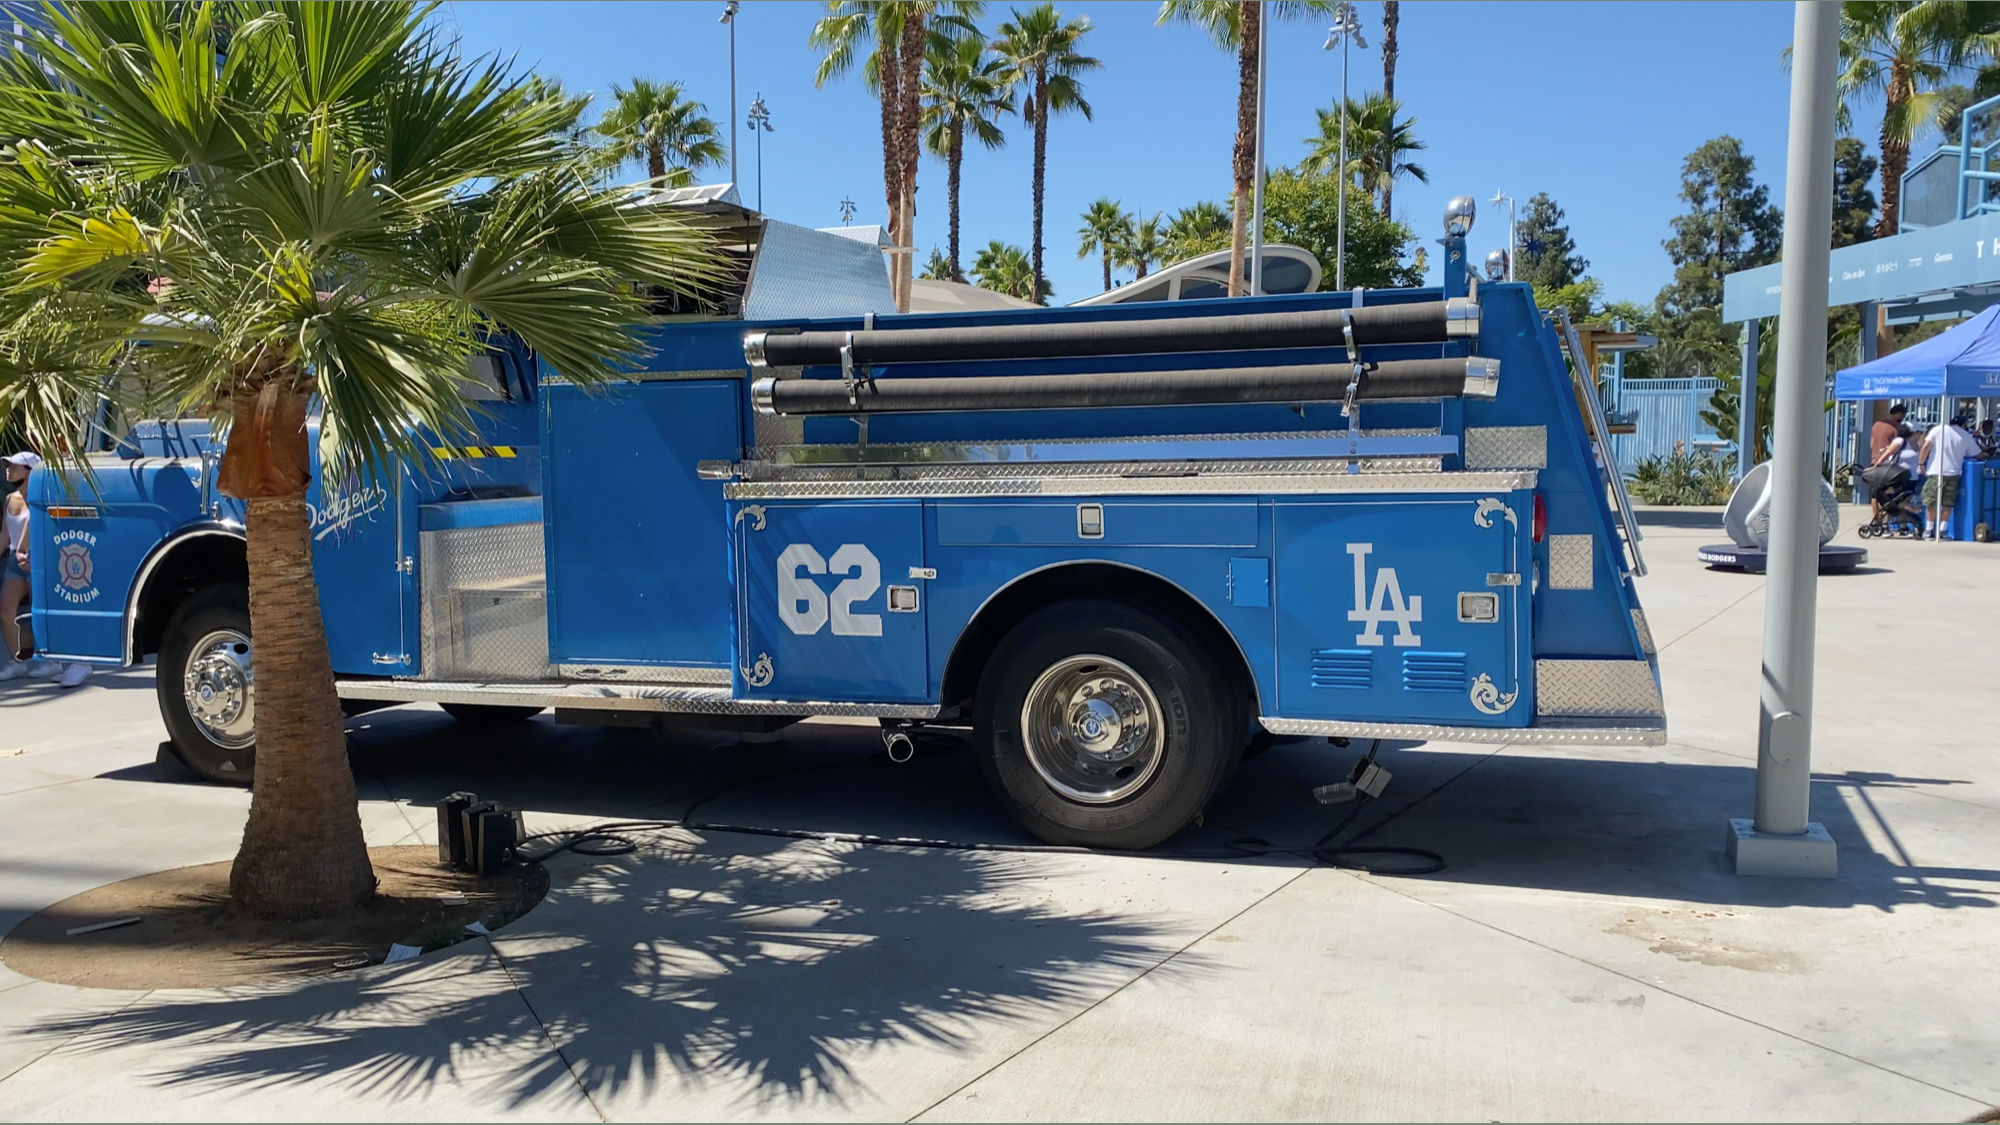 Dodger Stadium Blue Fire Truck Beer Booth